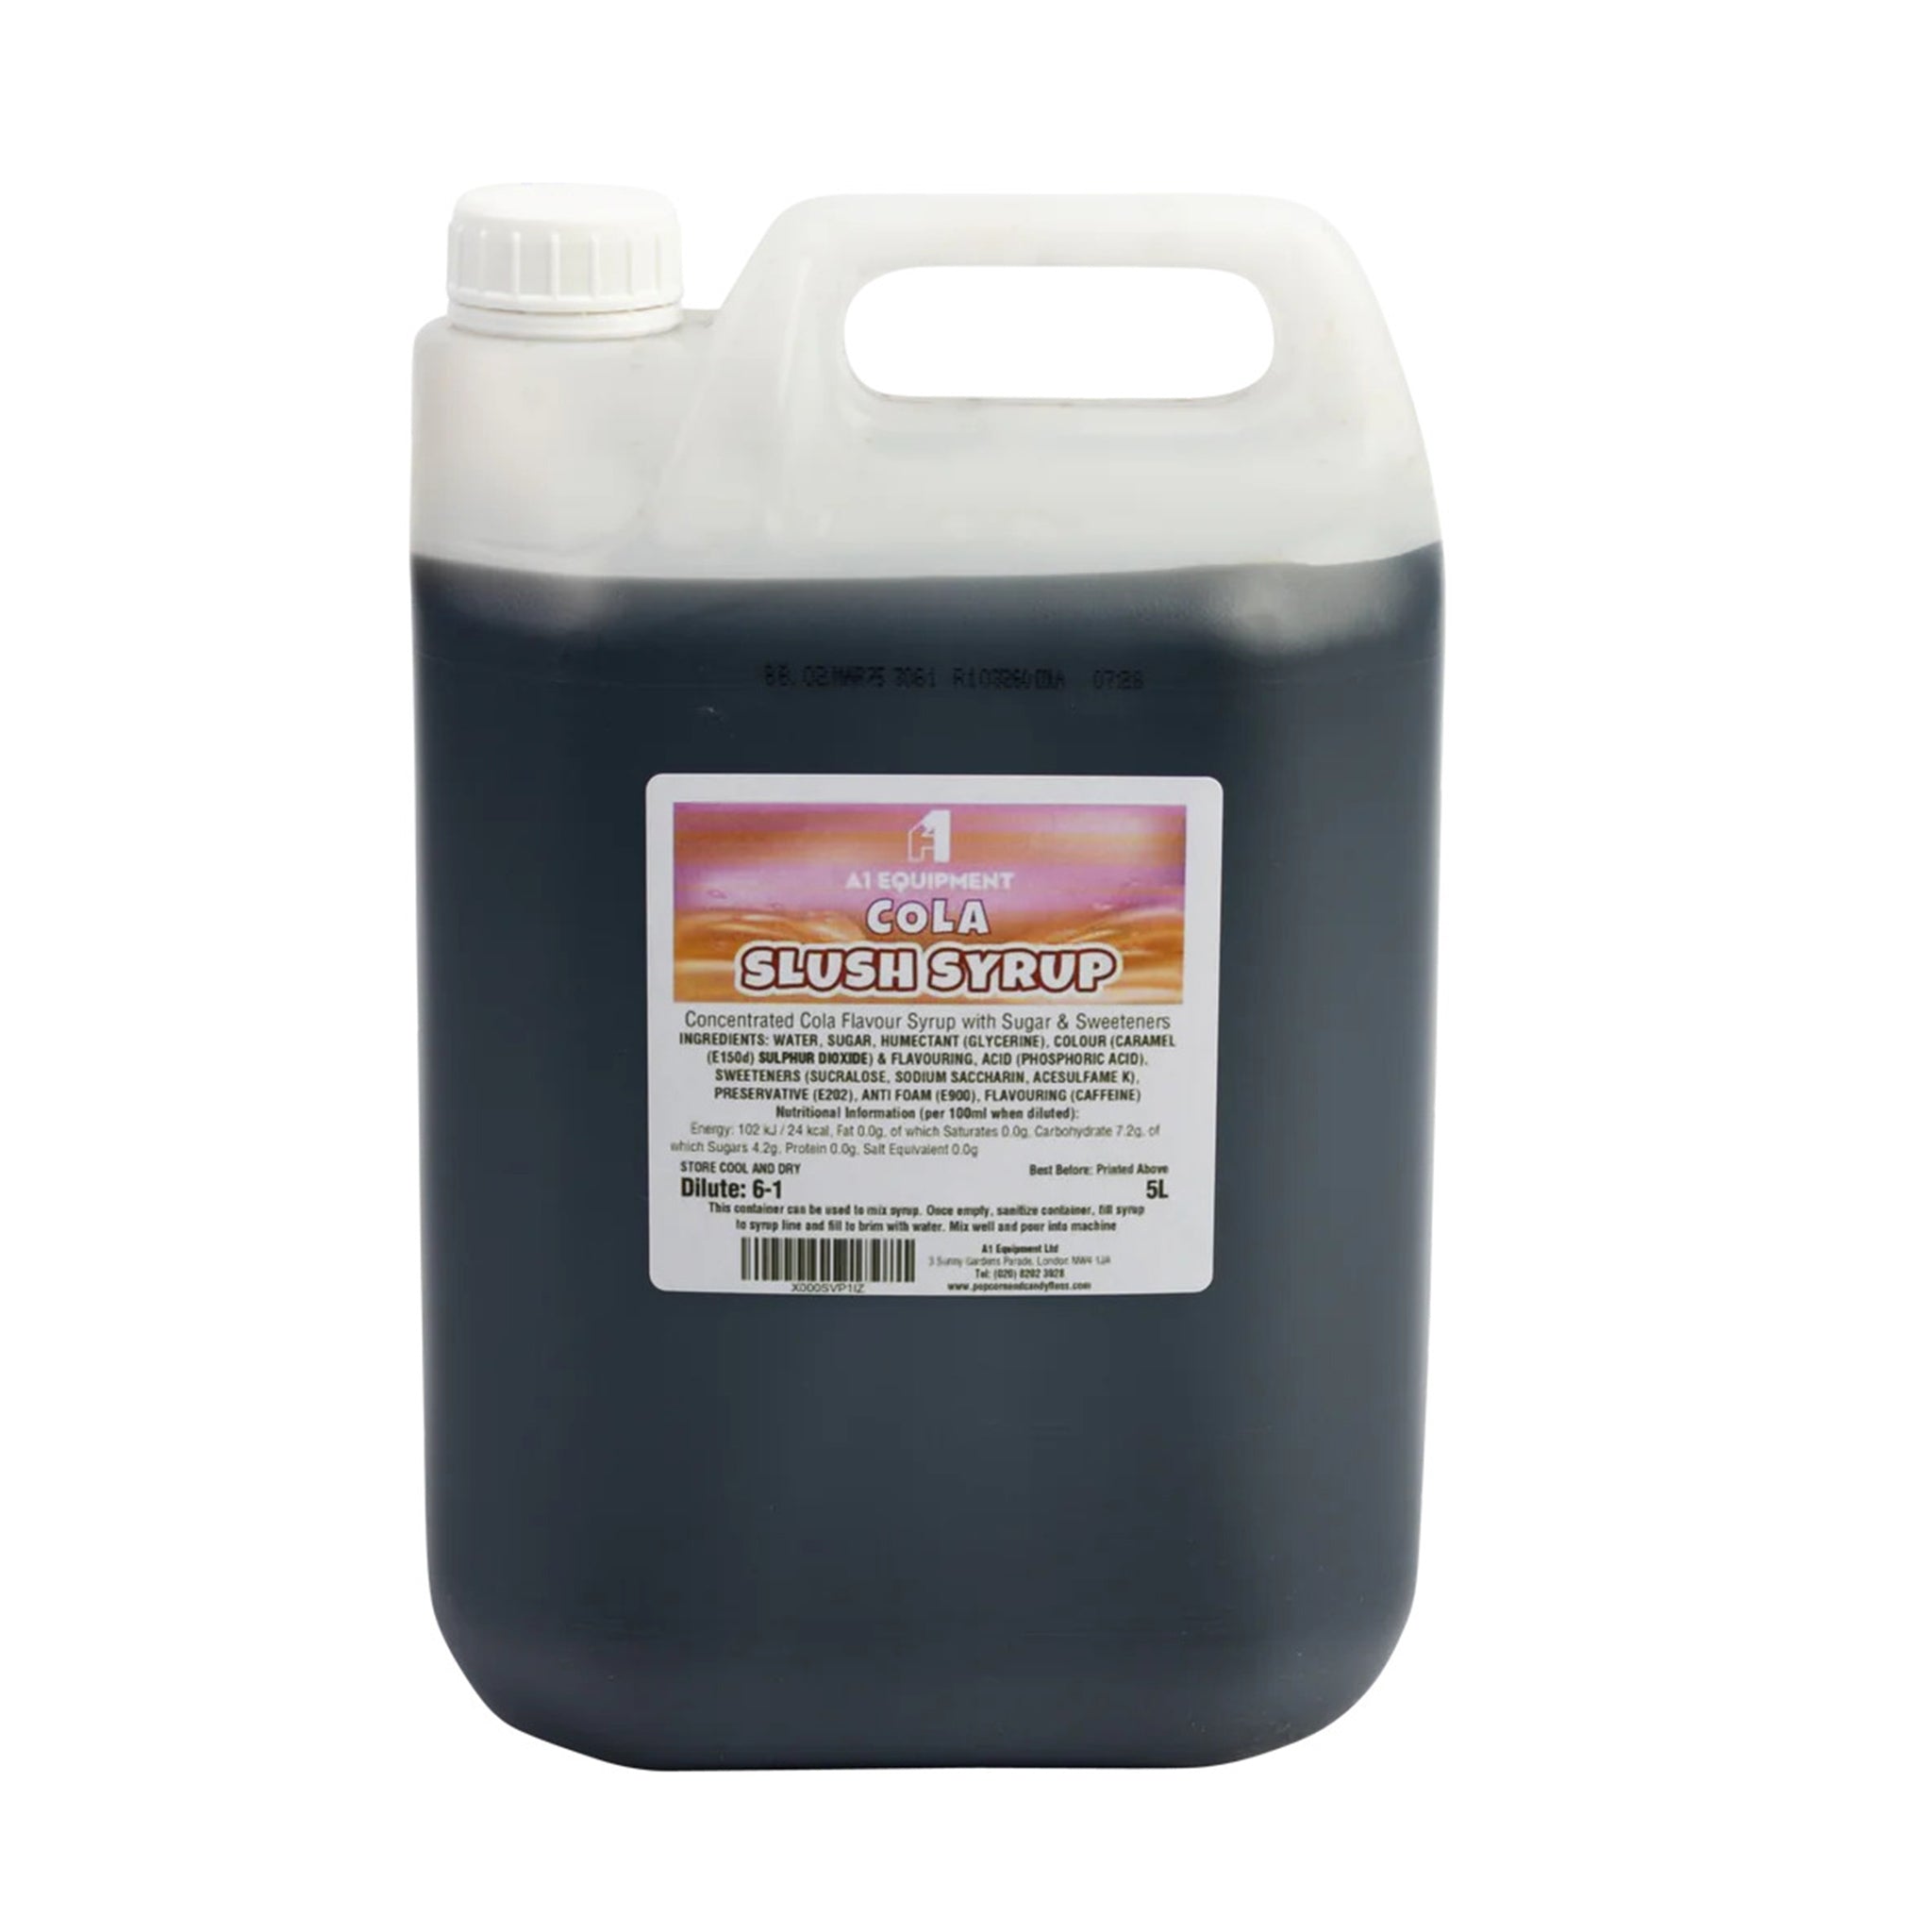 Slush Syrup 5L - All flavours 6-1 ratio